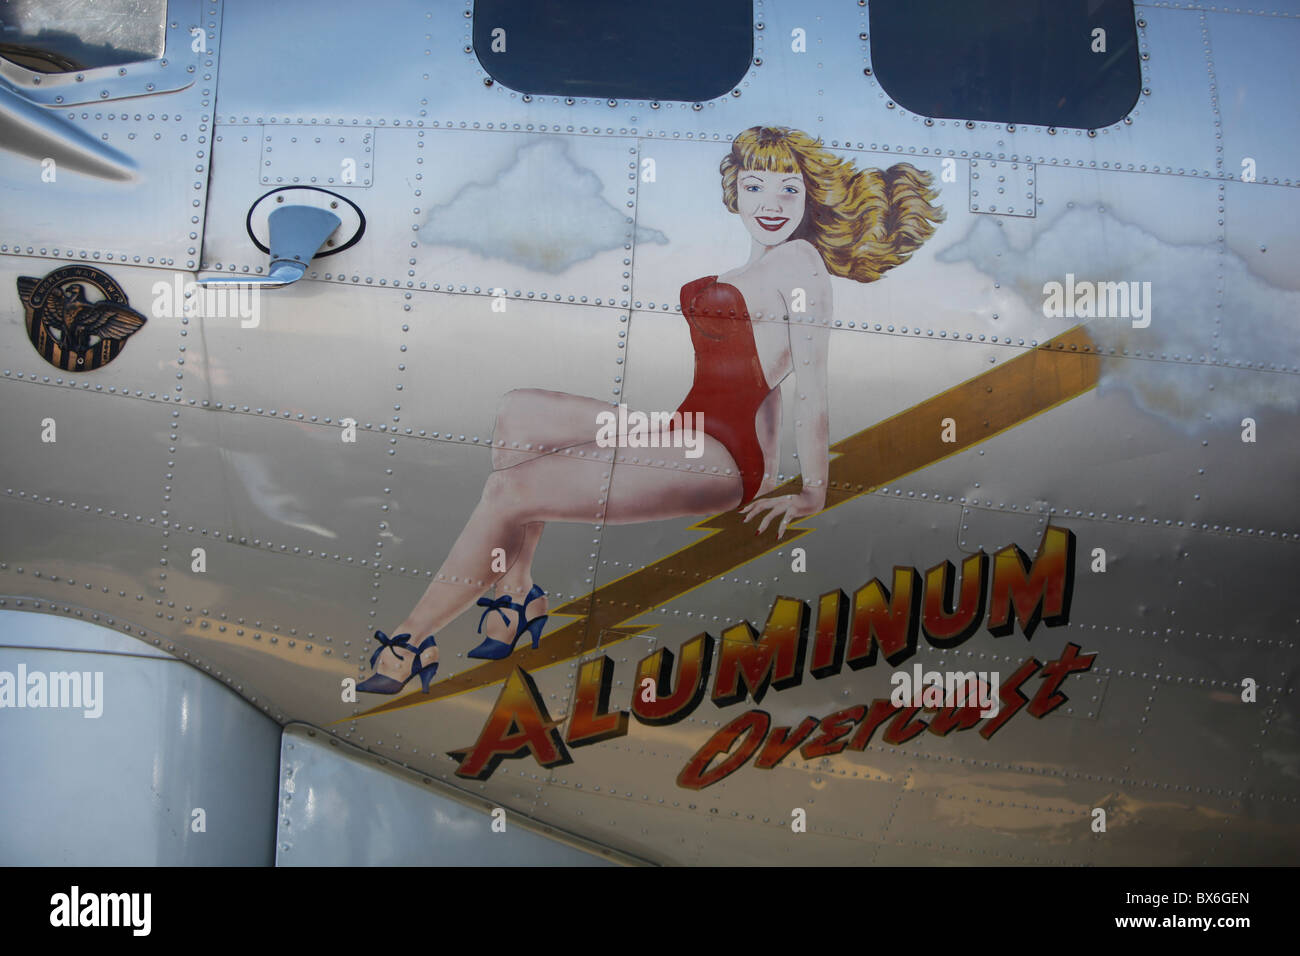 Aluminium bedeckt restaurierte b-17 Flying Fortress WWII Ära Bomber Flug Nase Kunst Frau blond Motoren laufen detail Stockfoto